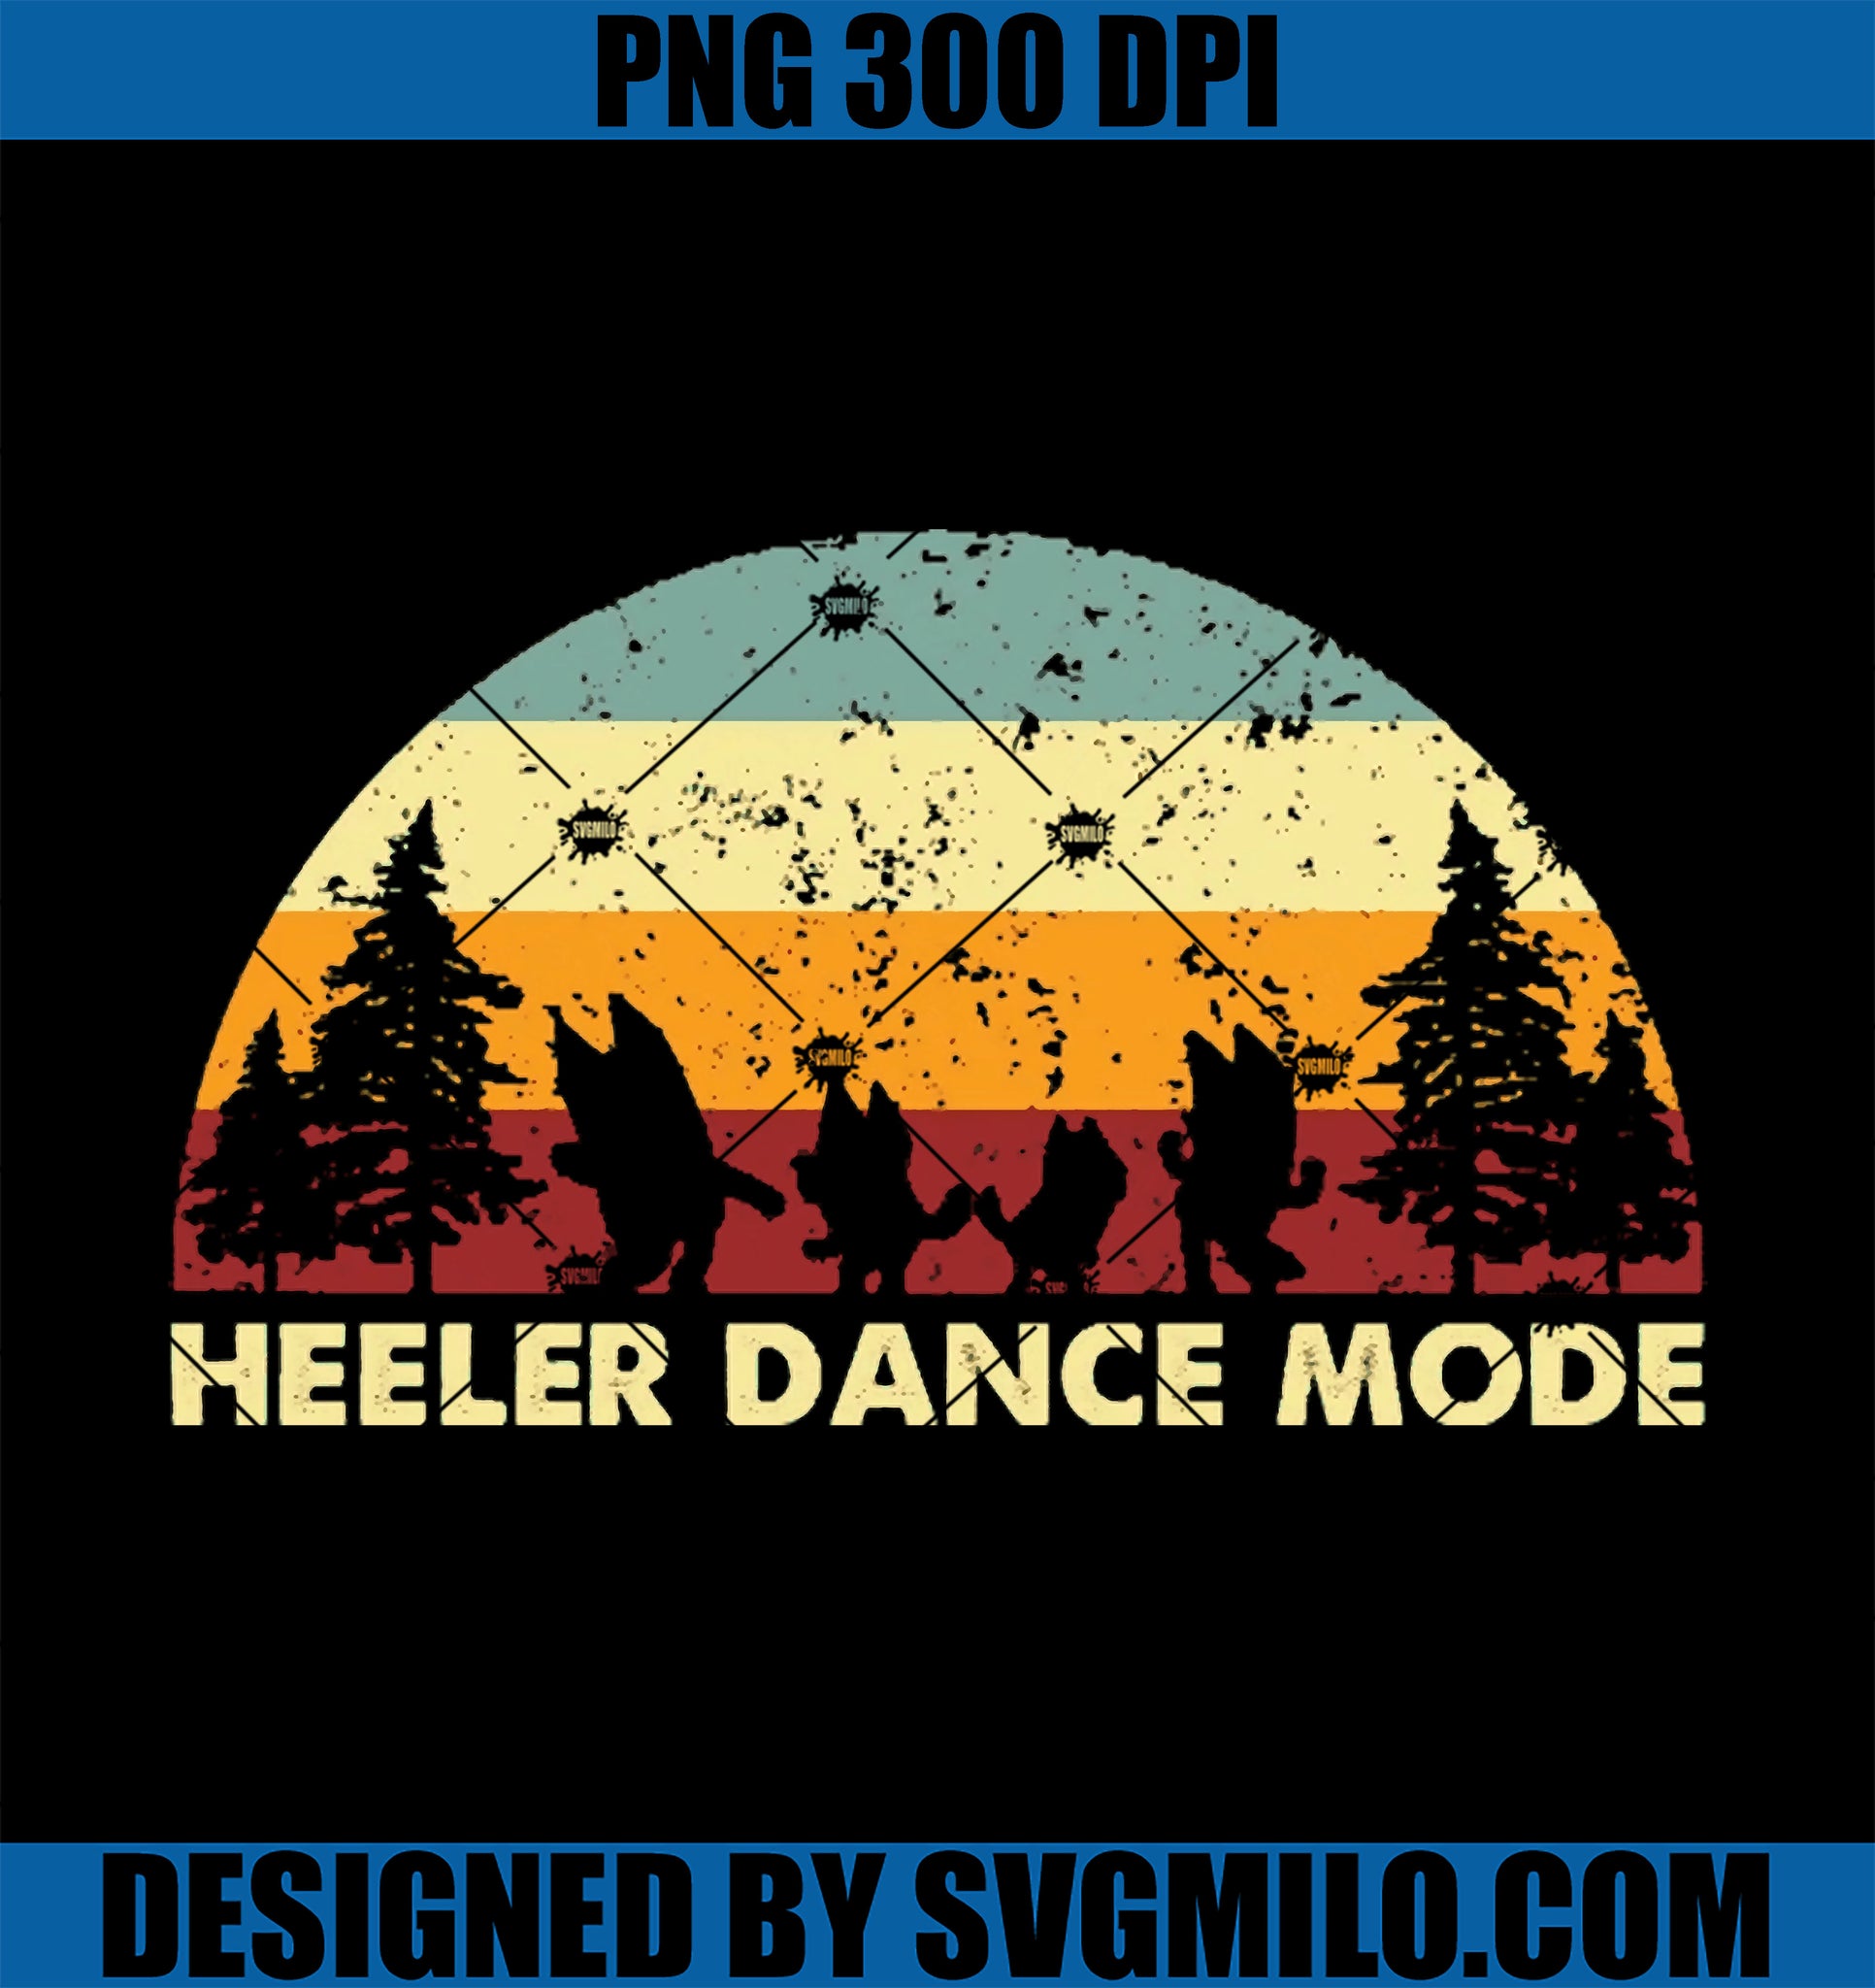 Heeler Dance Mode PNG, Retro Dance Mode PNG